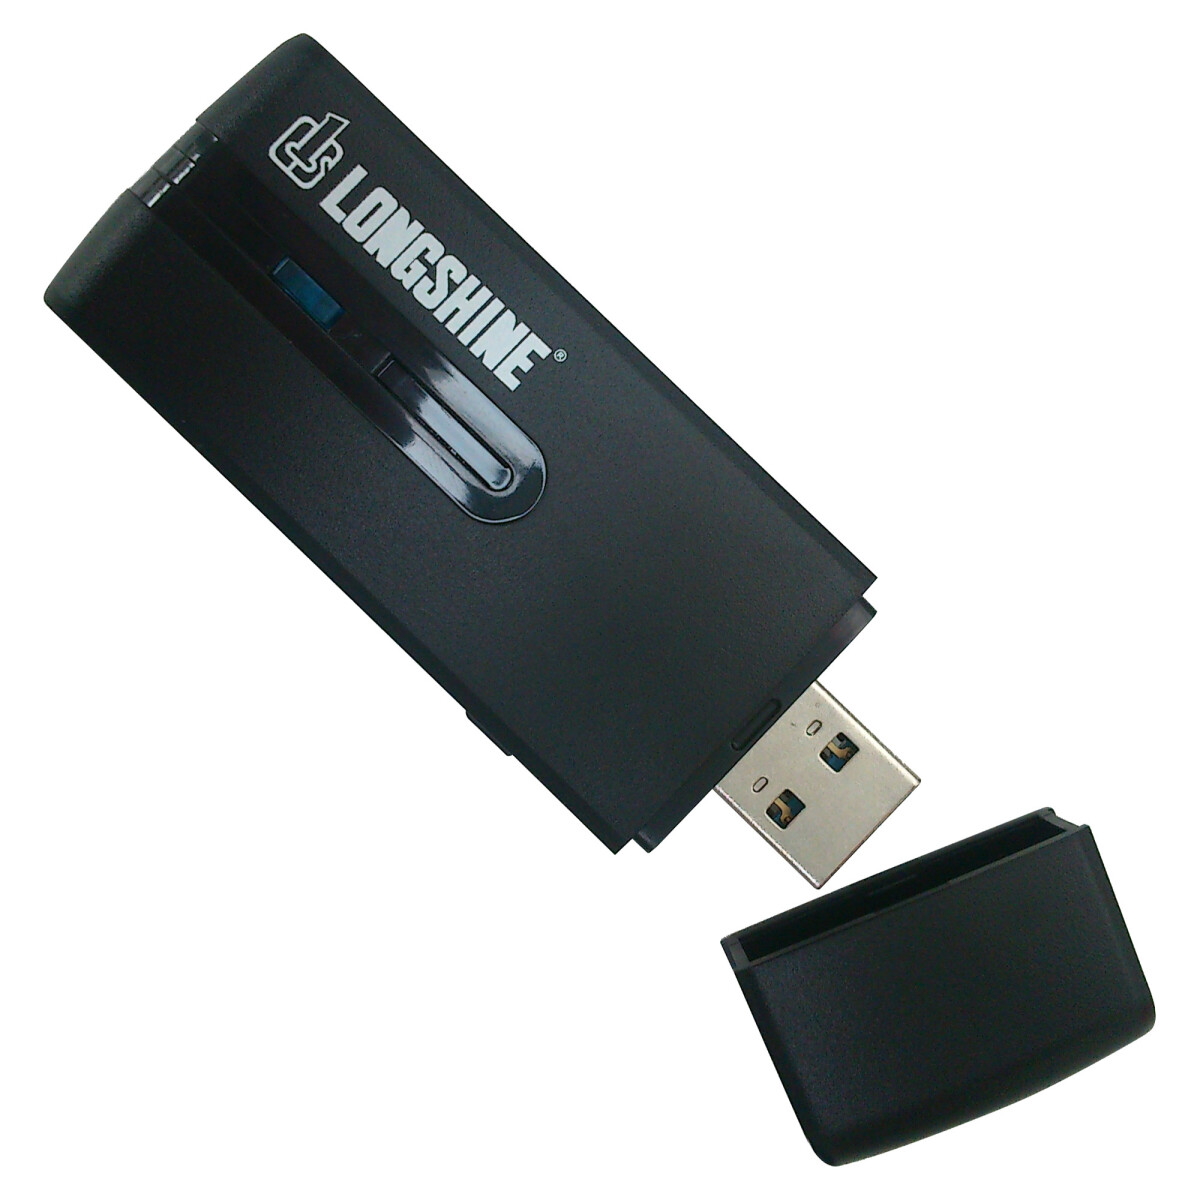 Longshine Wireless Adapter, LCS-8133, USB 3.0, 300Mbit/s